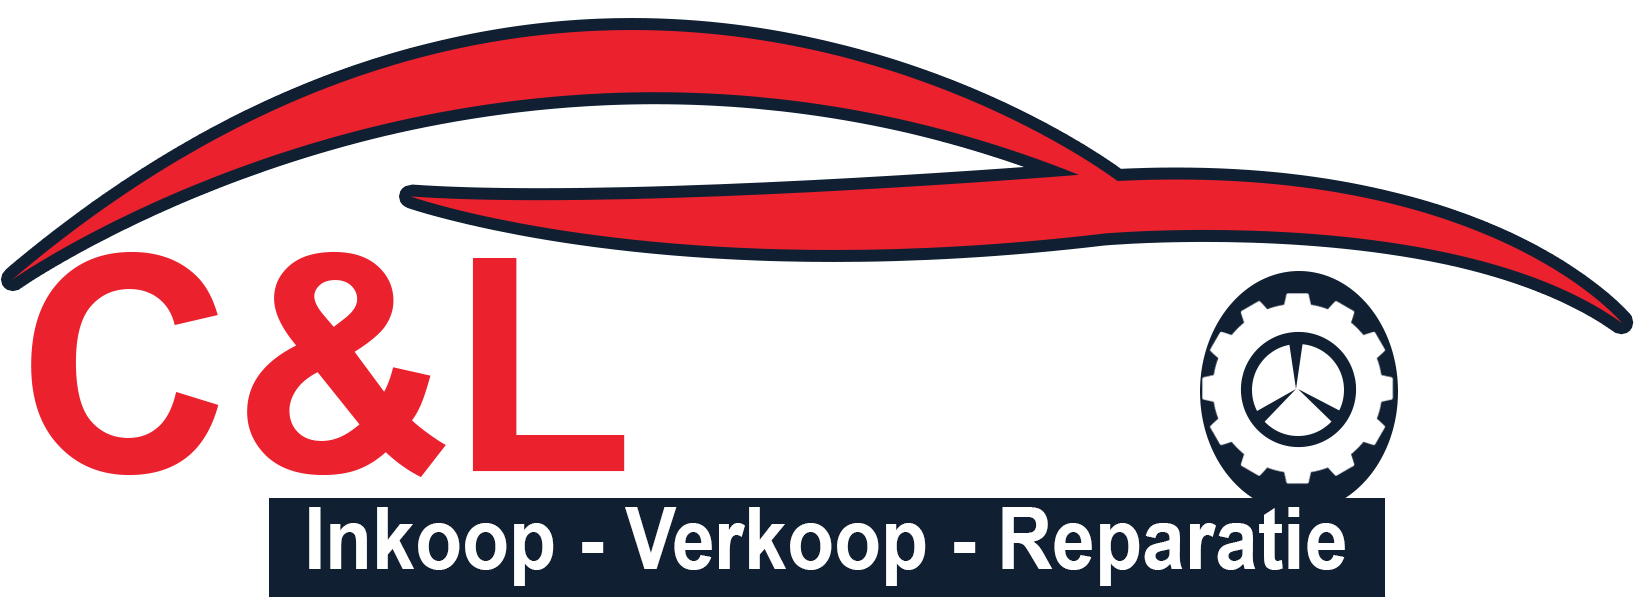 C&L Auto's logo